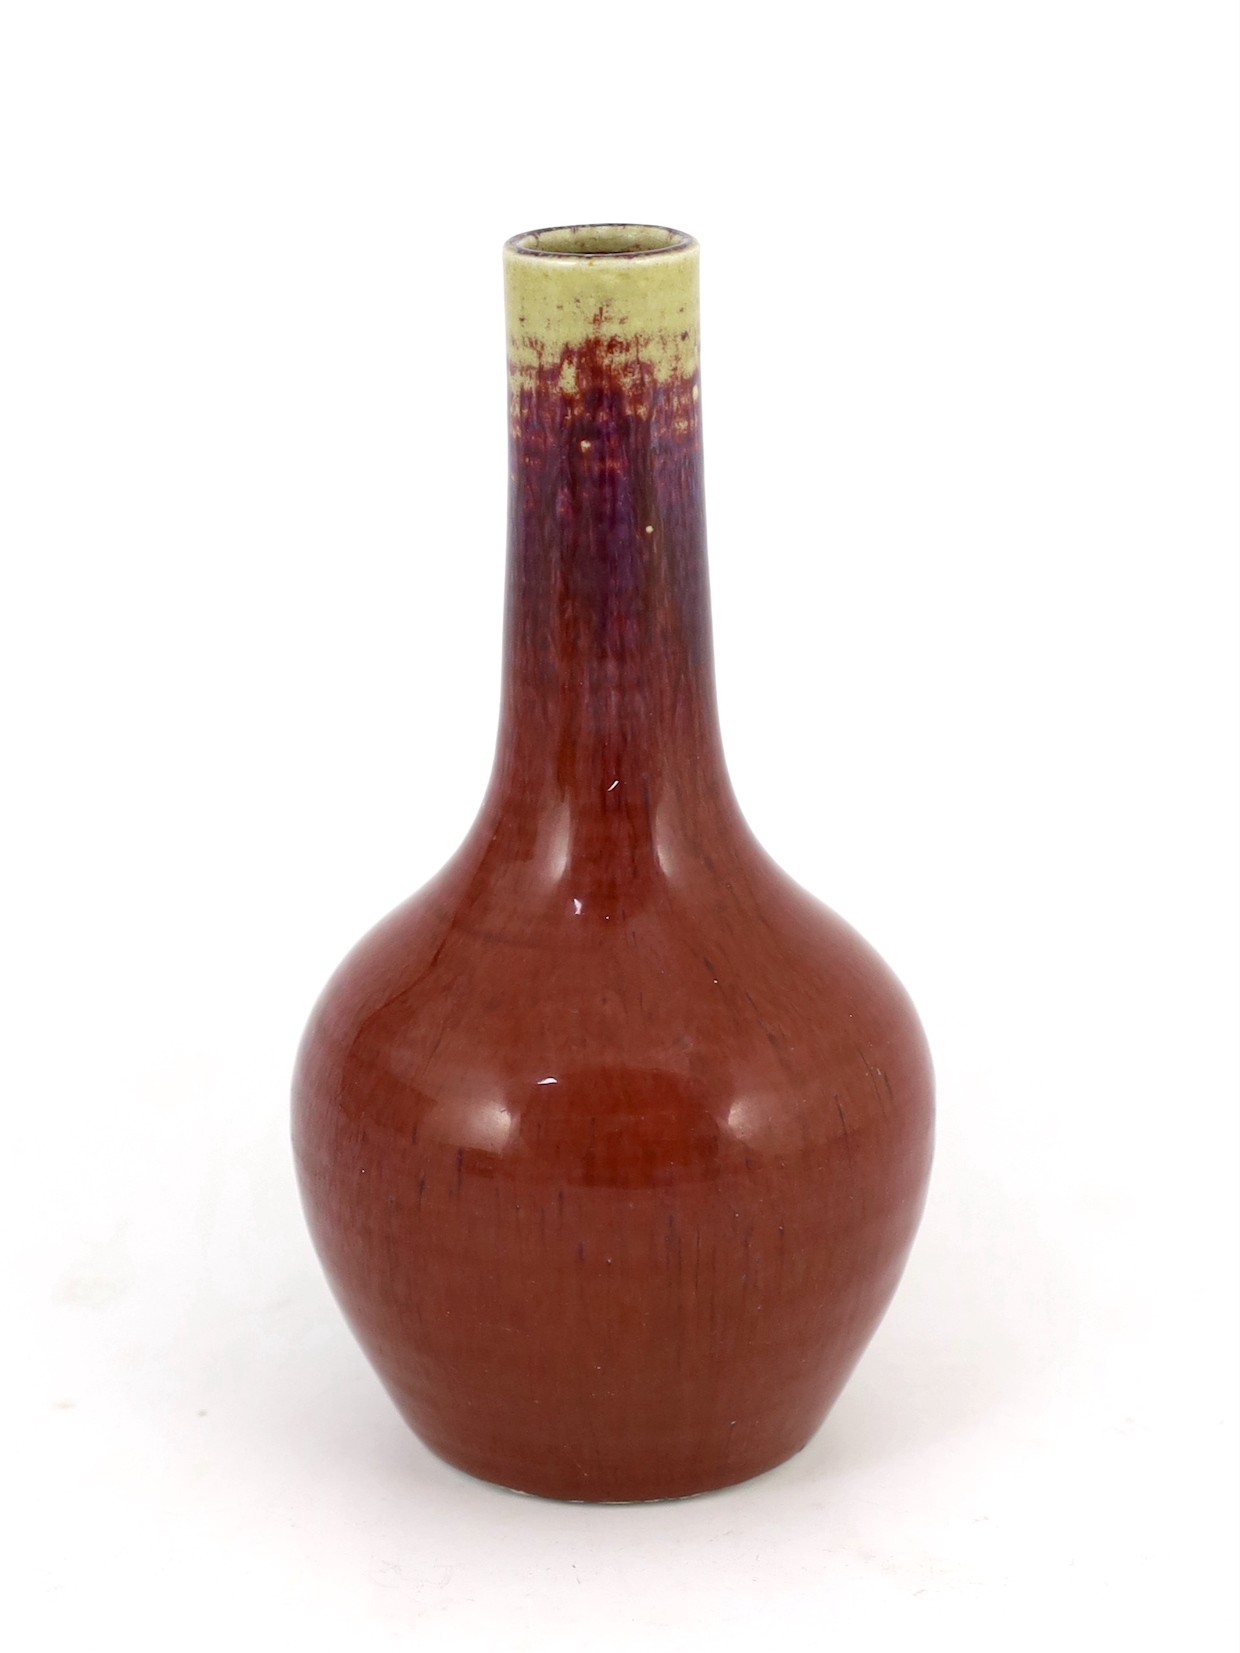 A Chinese flambé bottle vase, Langyao, 18th century, 20.7cm high